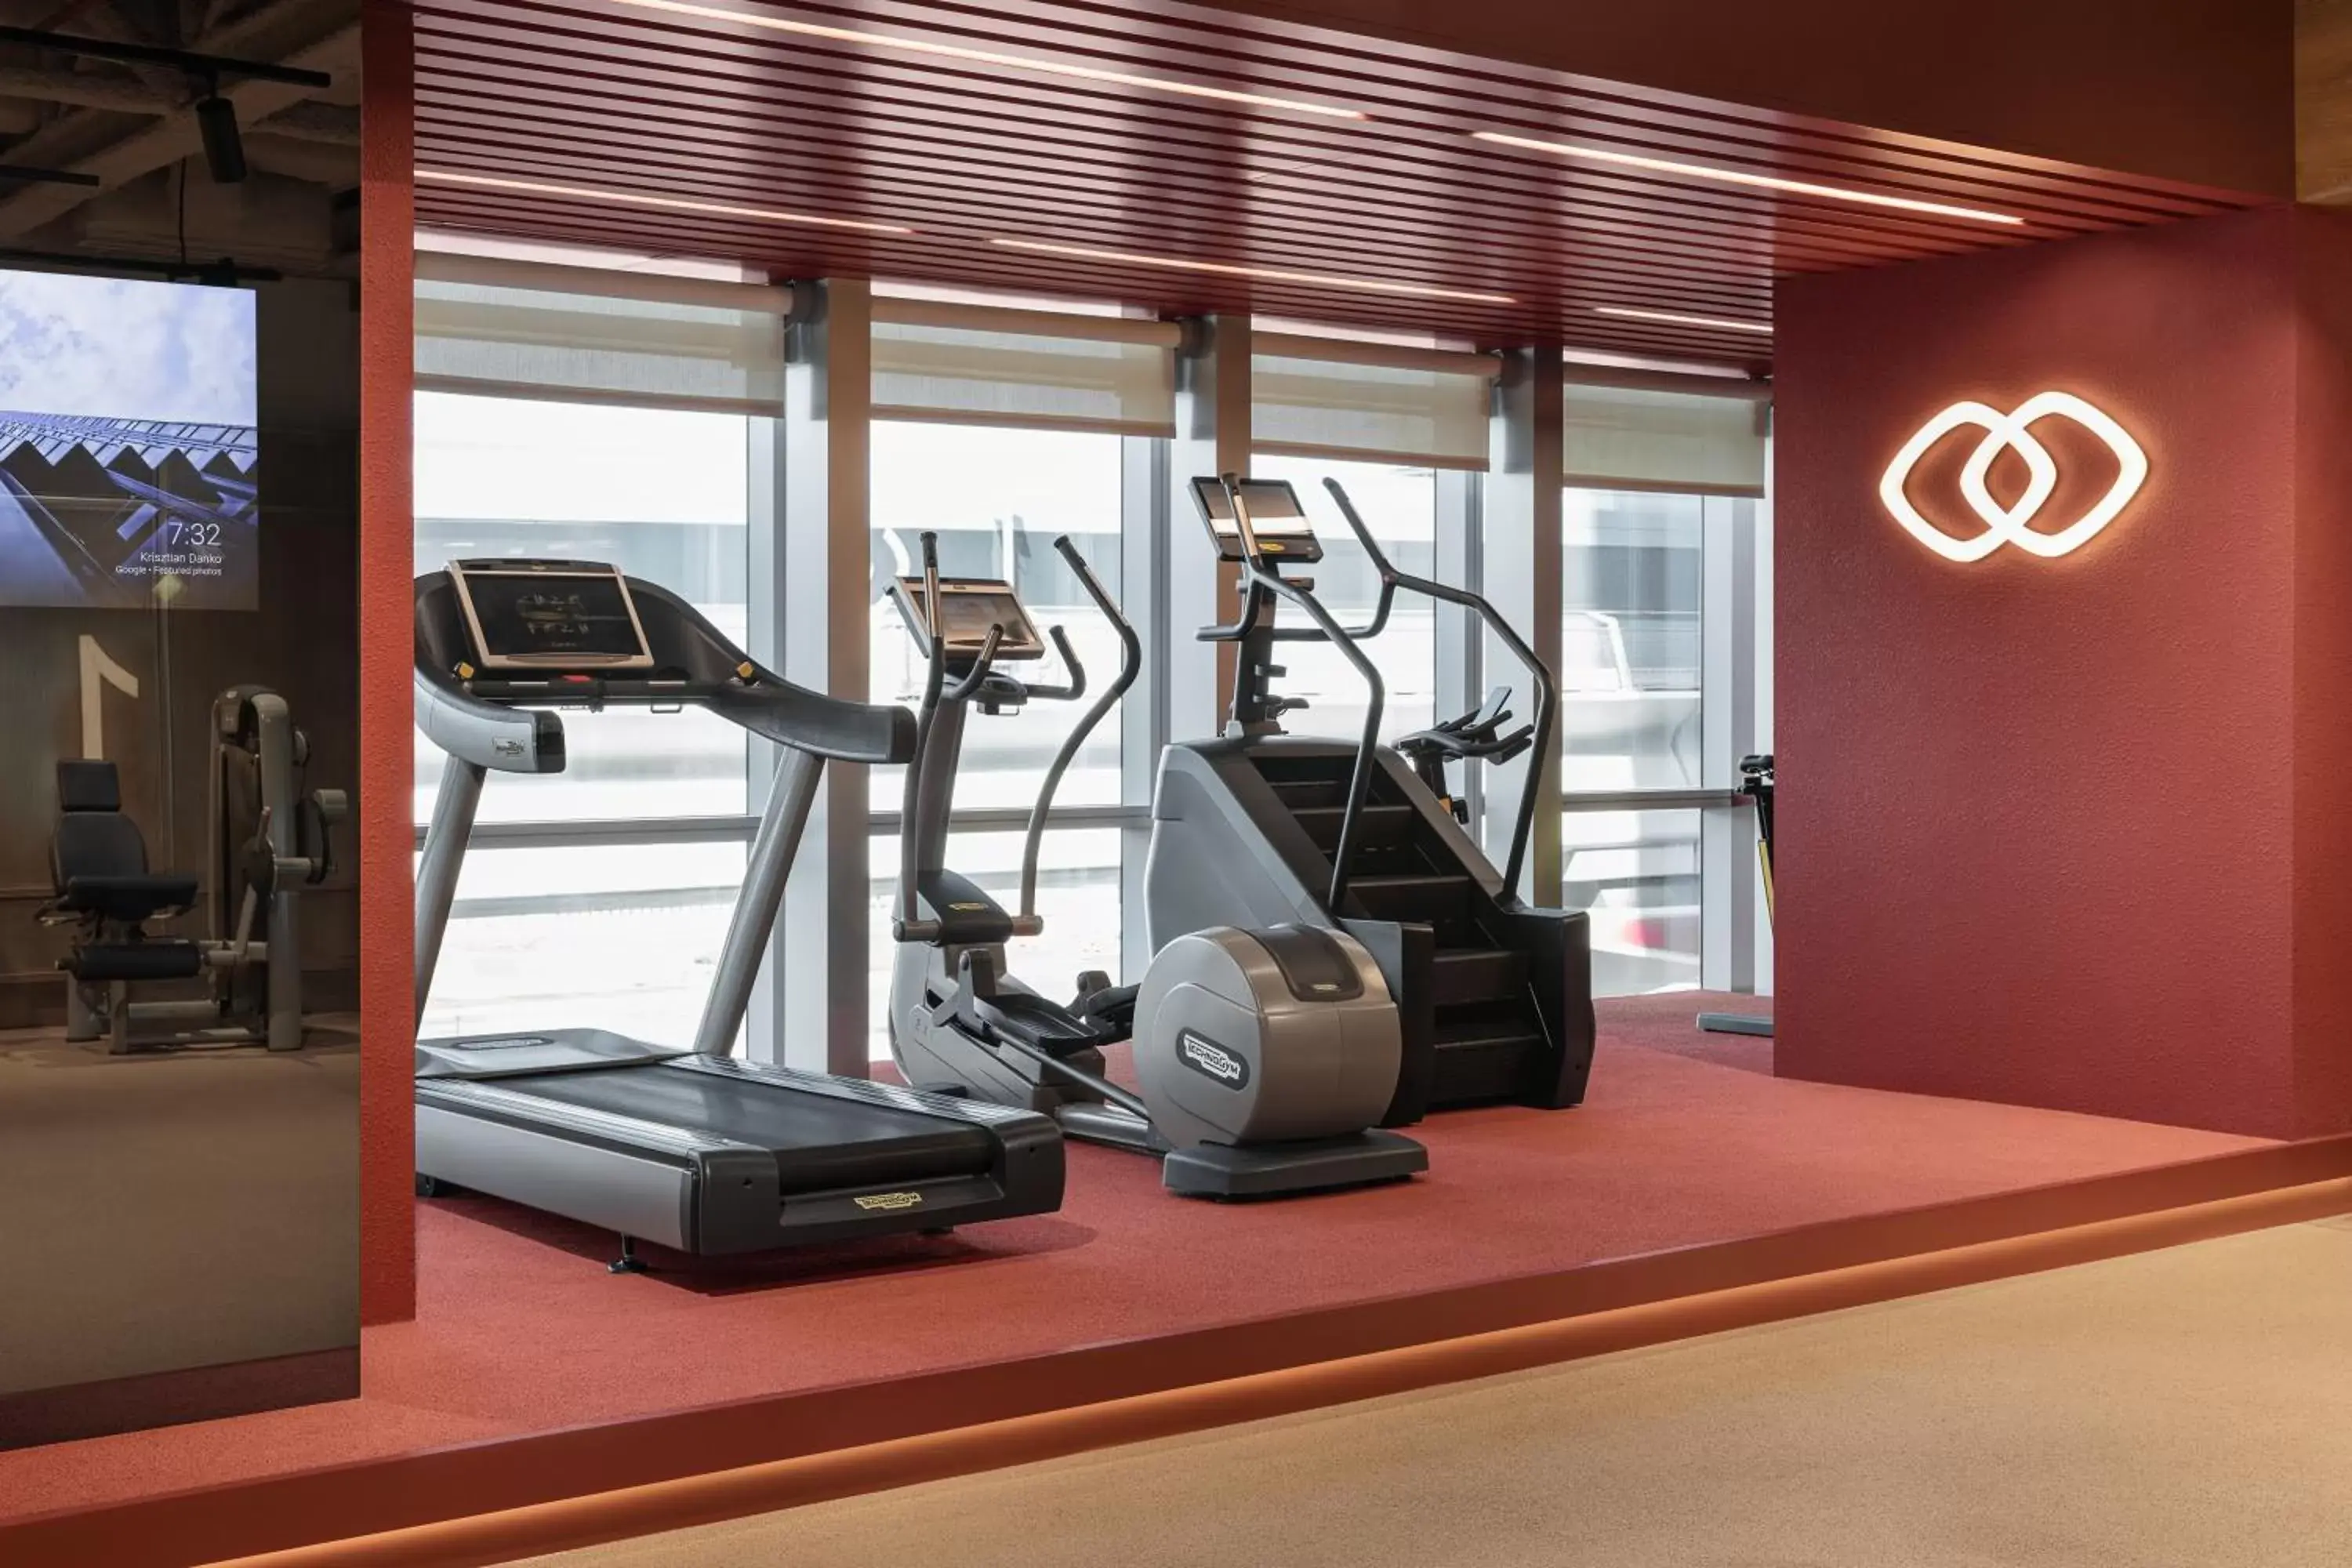 Fitness centre/facilities, Fitness Center/Facilities in Sofitel Dubai Downtown